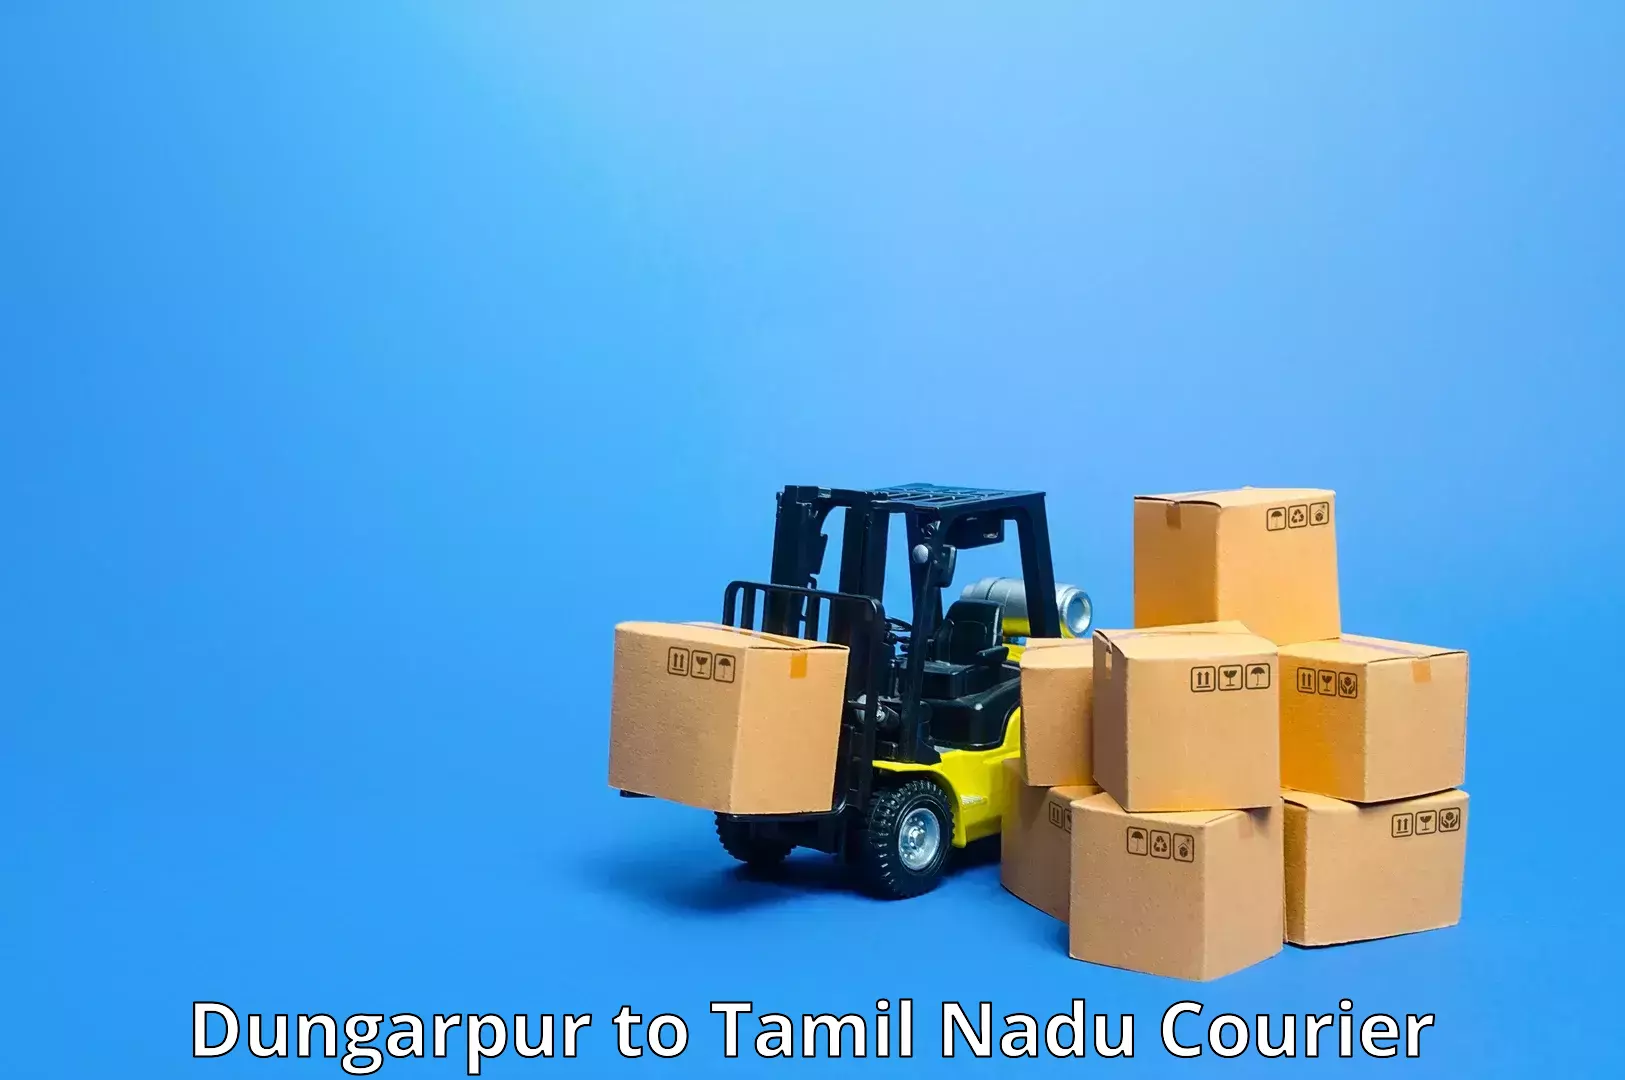 Express delivery network Dungarpur to Kanchipuram